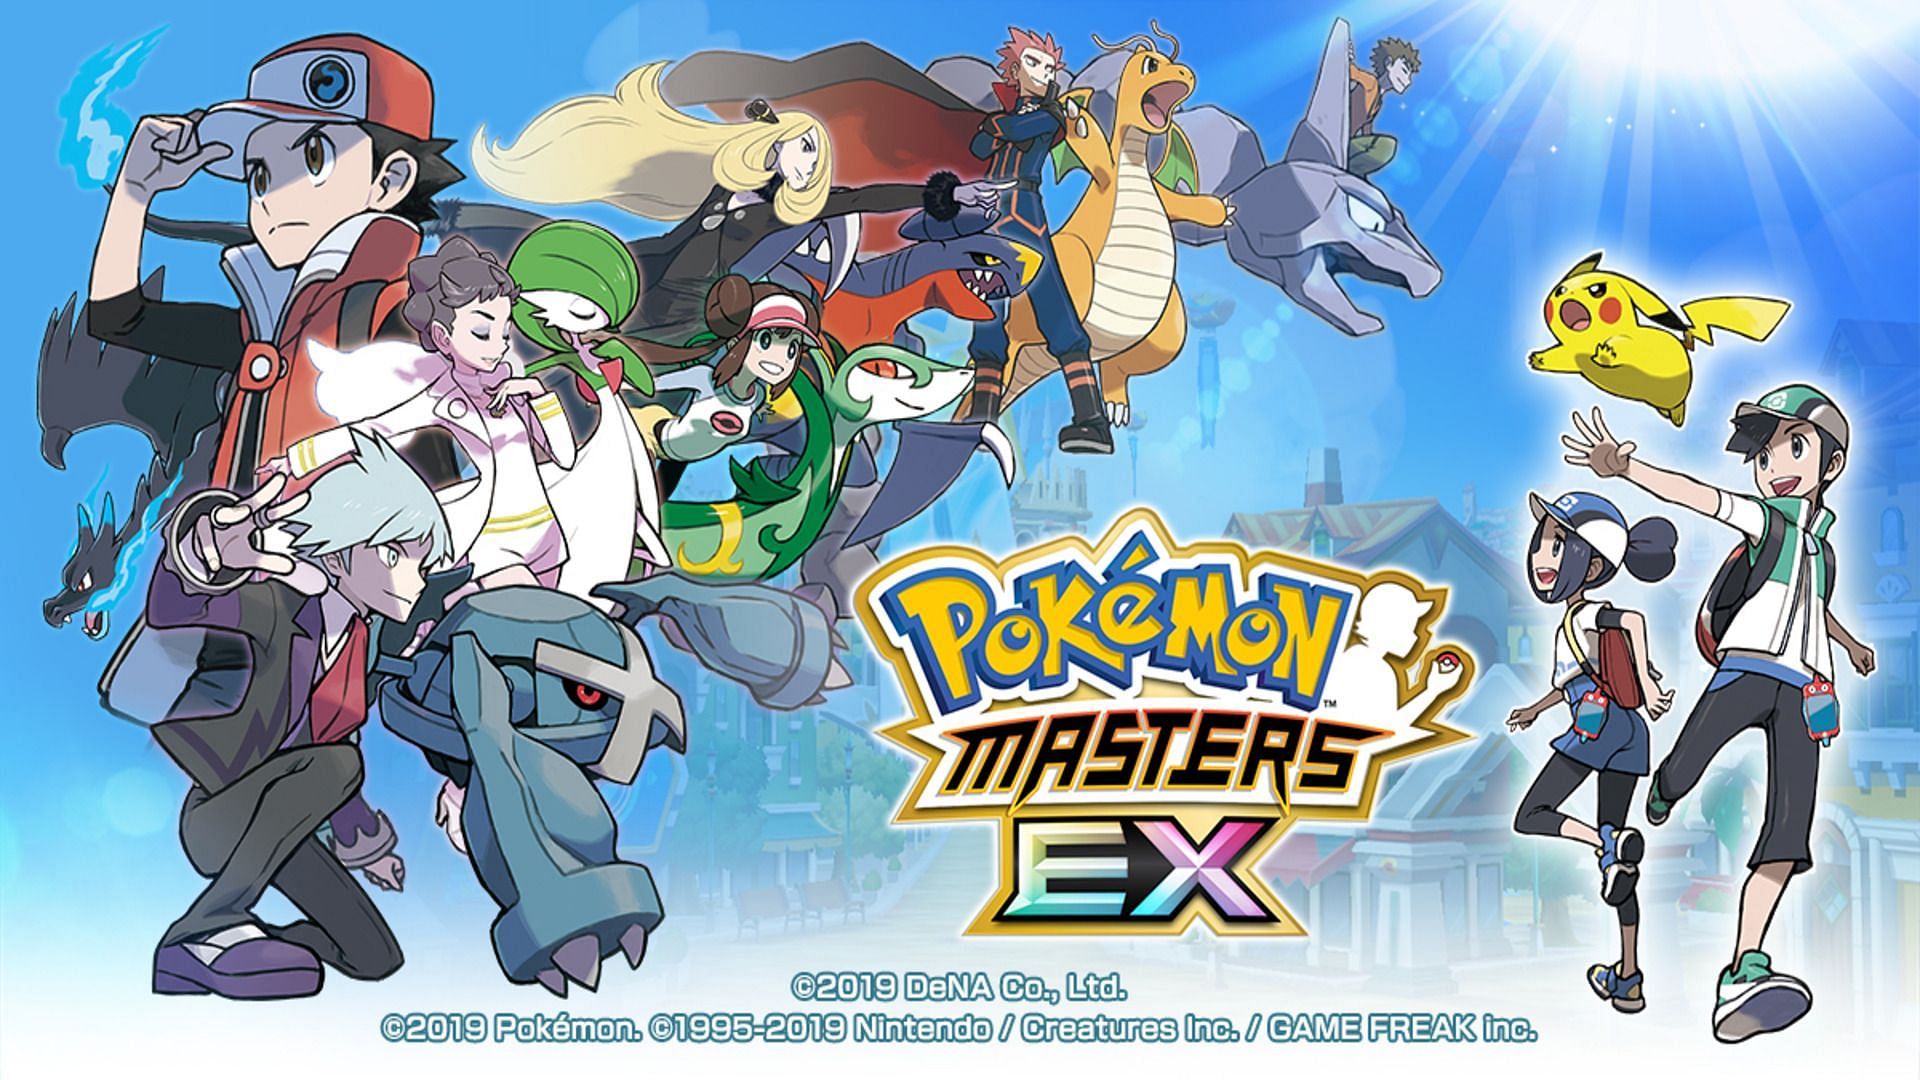 Official artwork for Pokemon Masters EX (Image via The Pokemon Company)